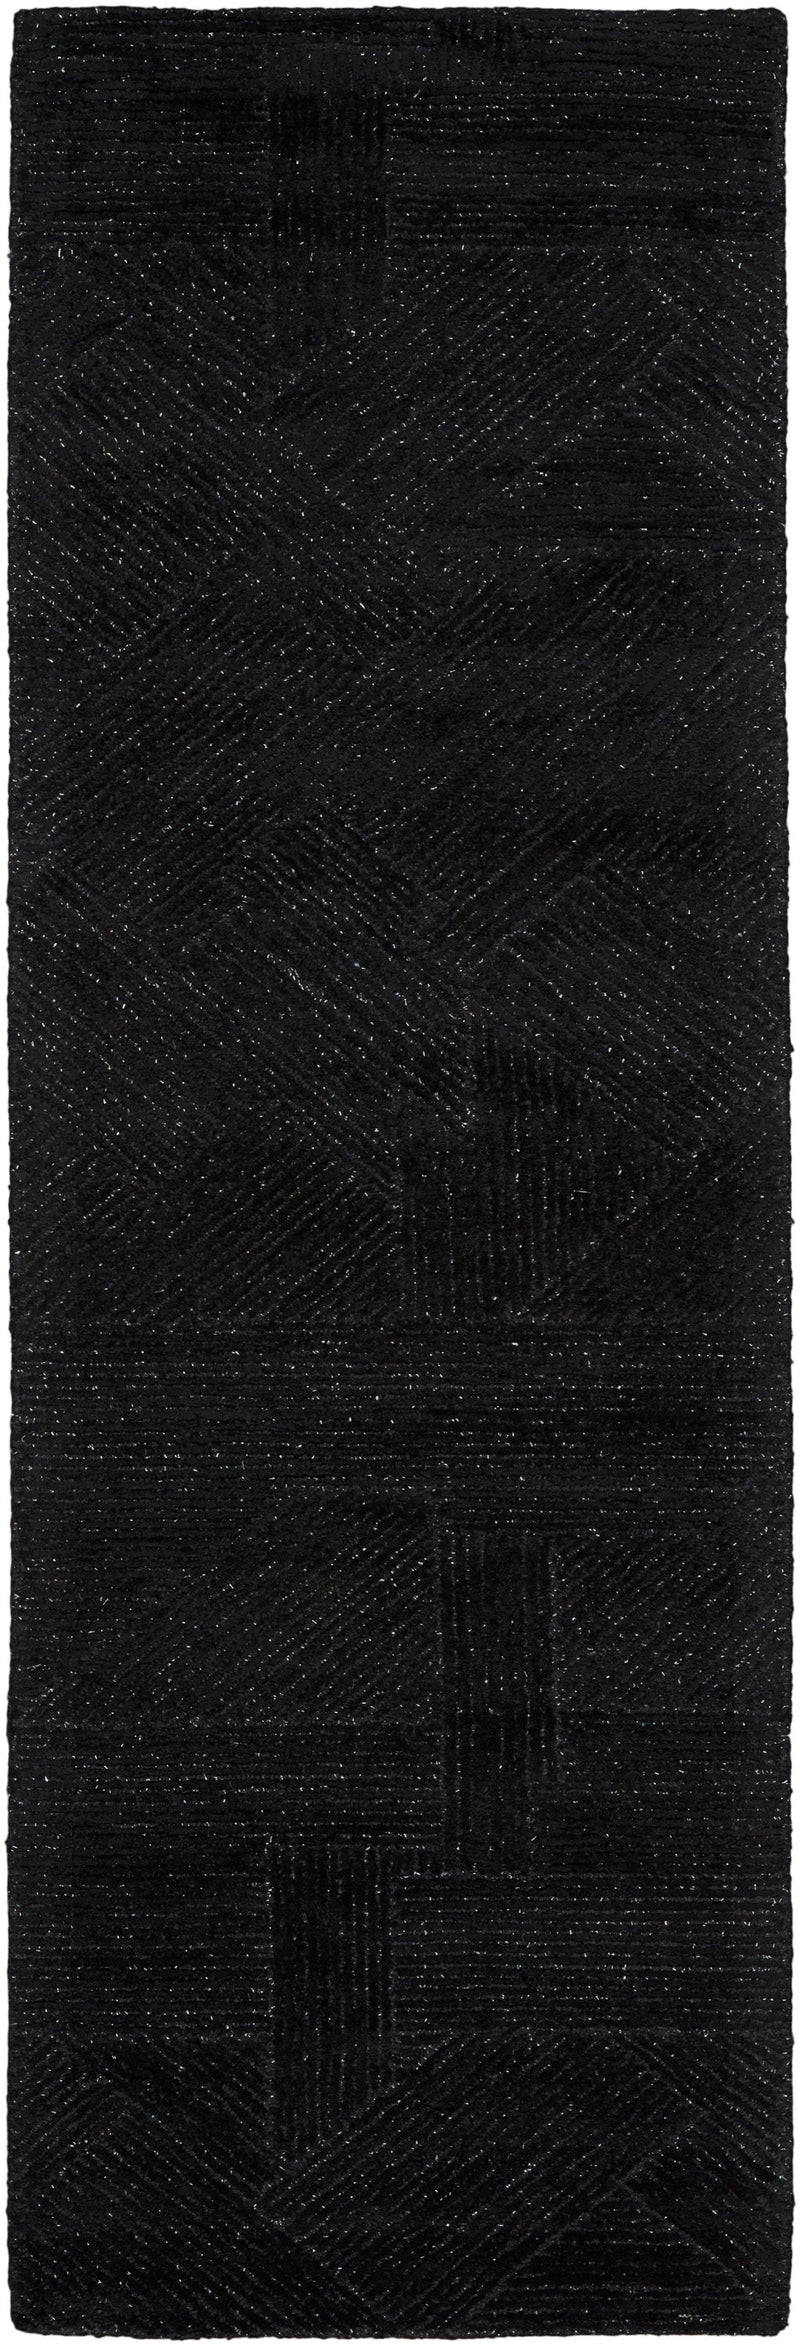 media image for ma30 star handmade black rug by nourison 99446880871 redo 2 240